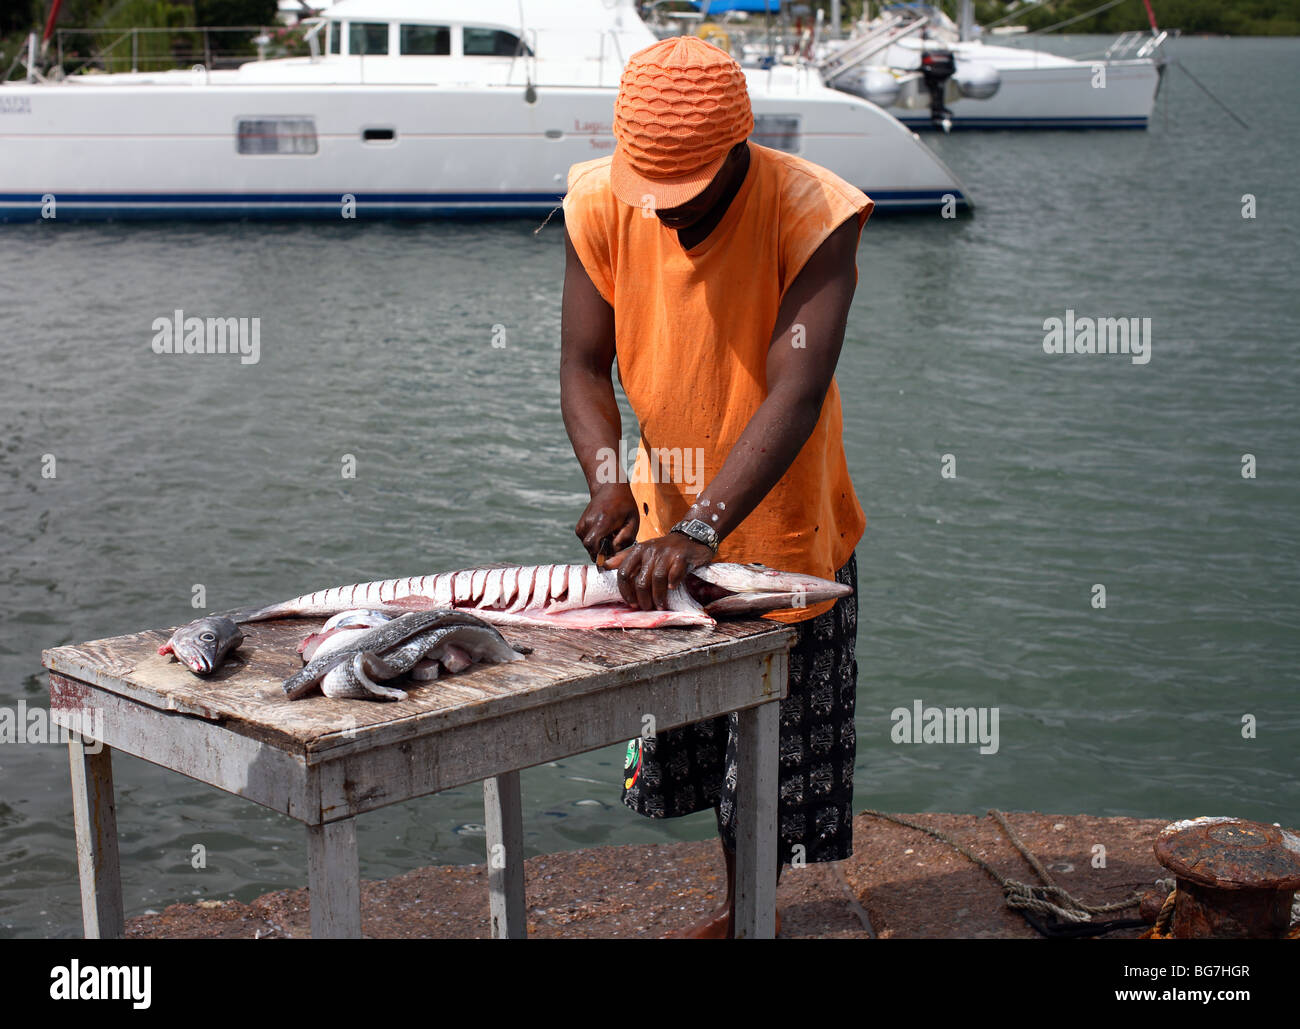 Local fisherman cutting fish Stock Photo - Alamy